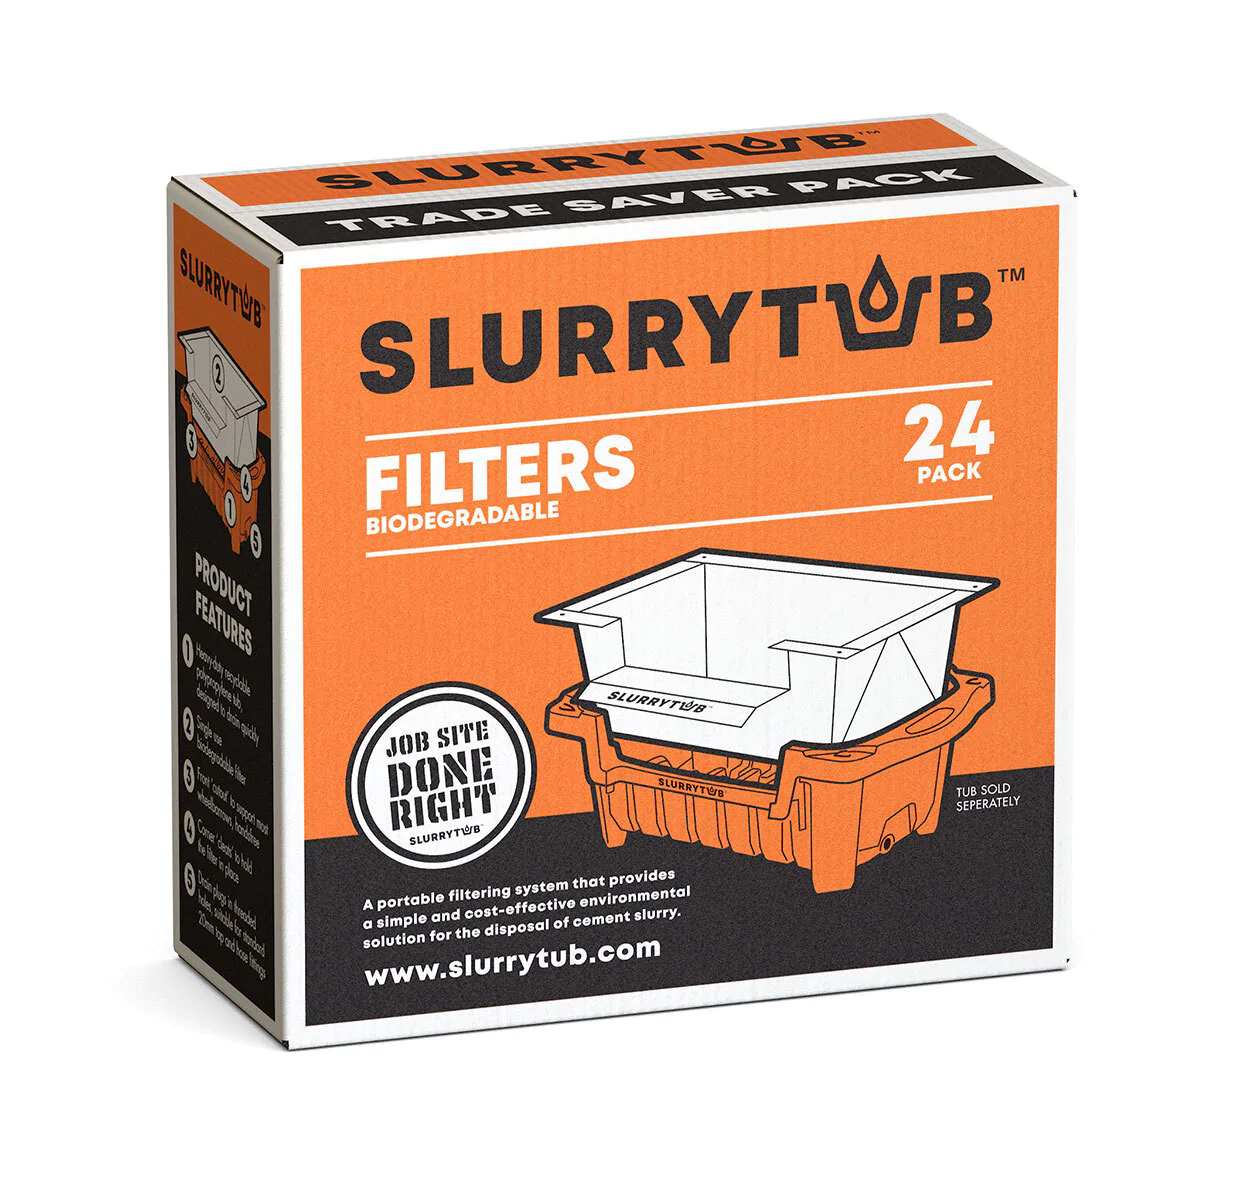 SlurryTub Filter Pack of 24